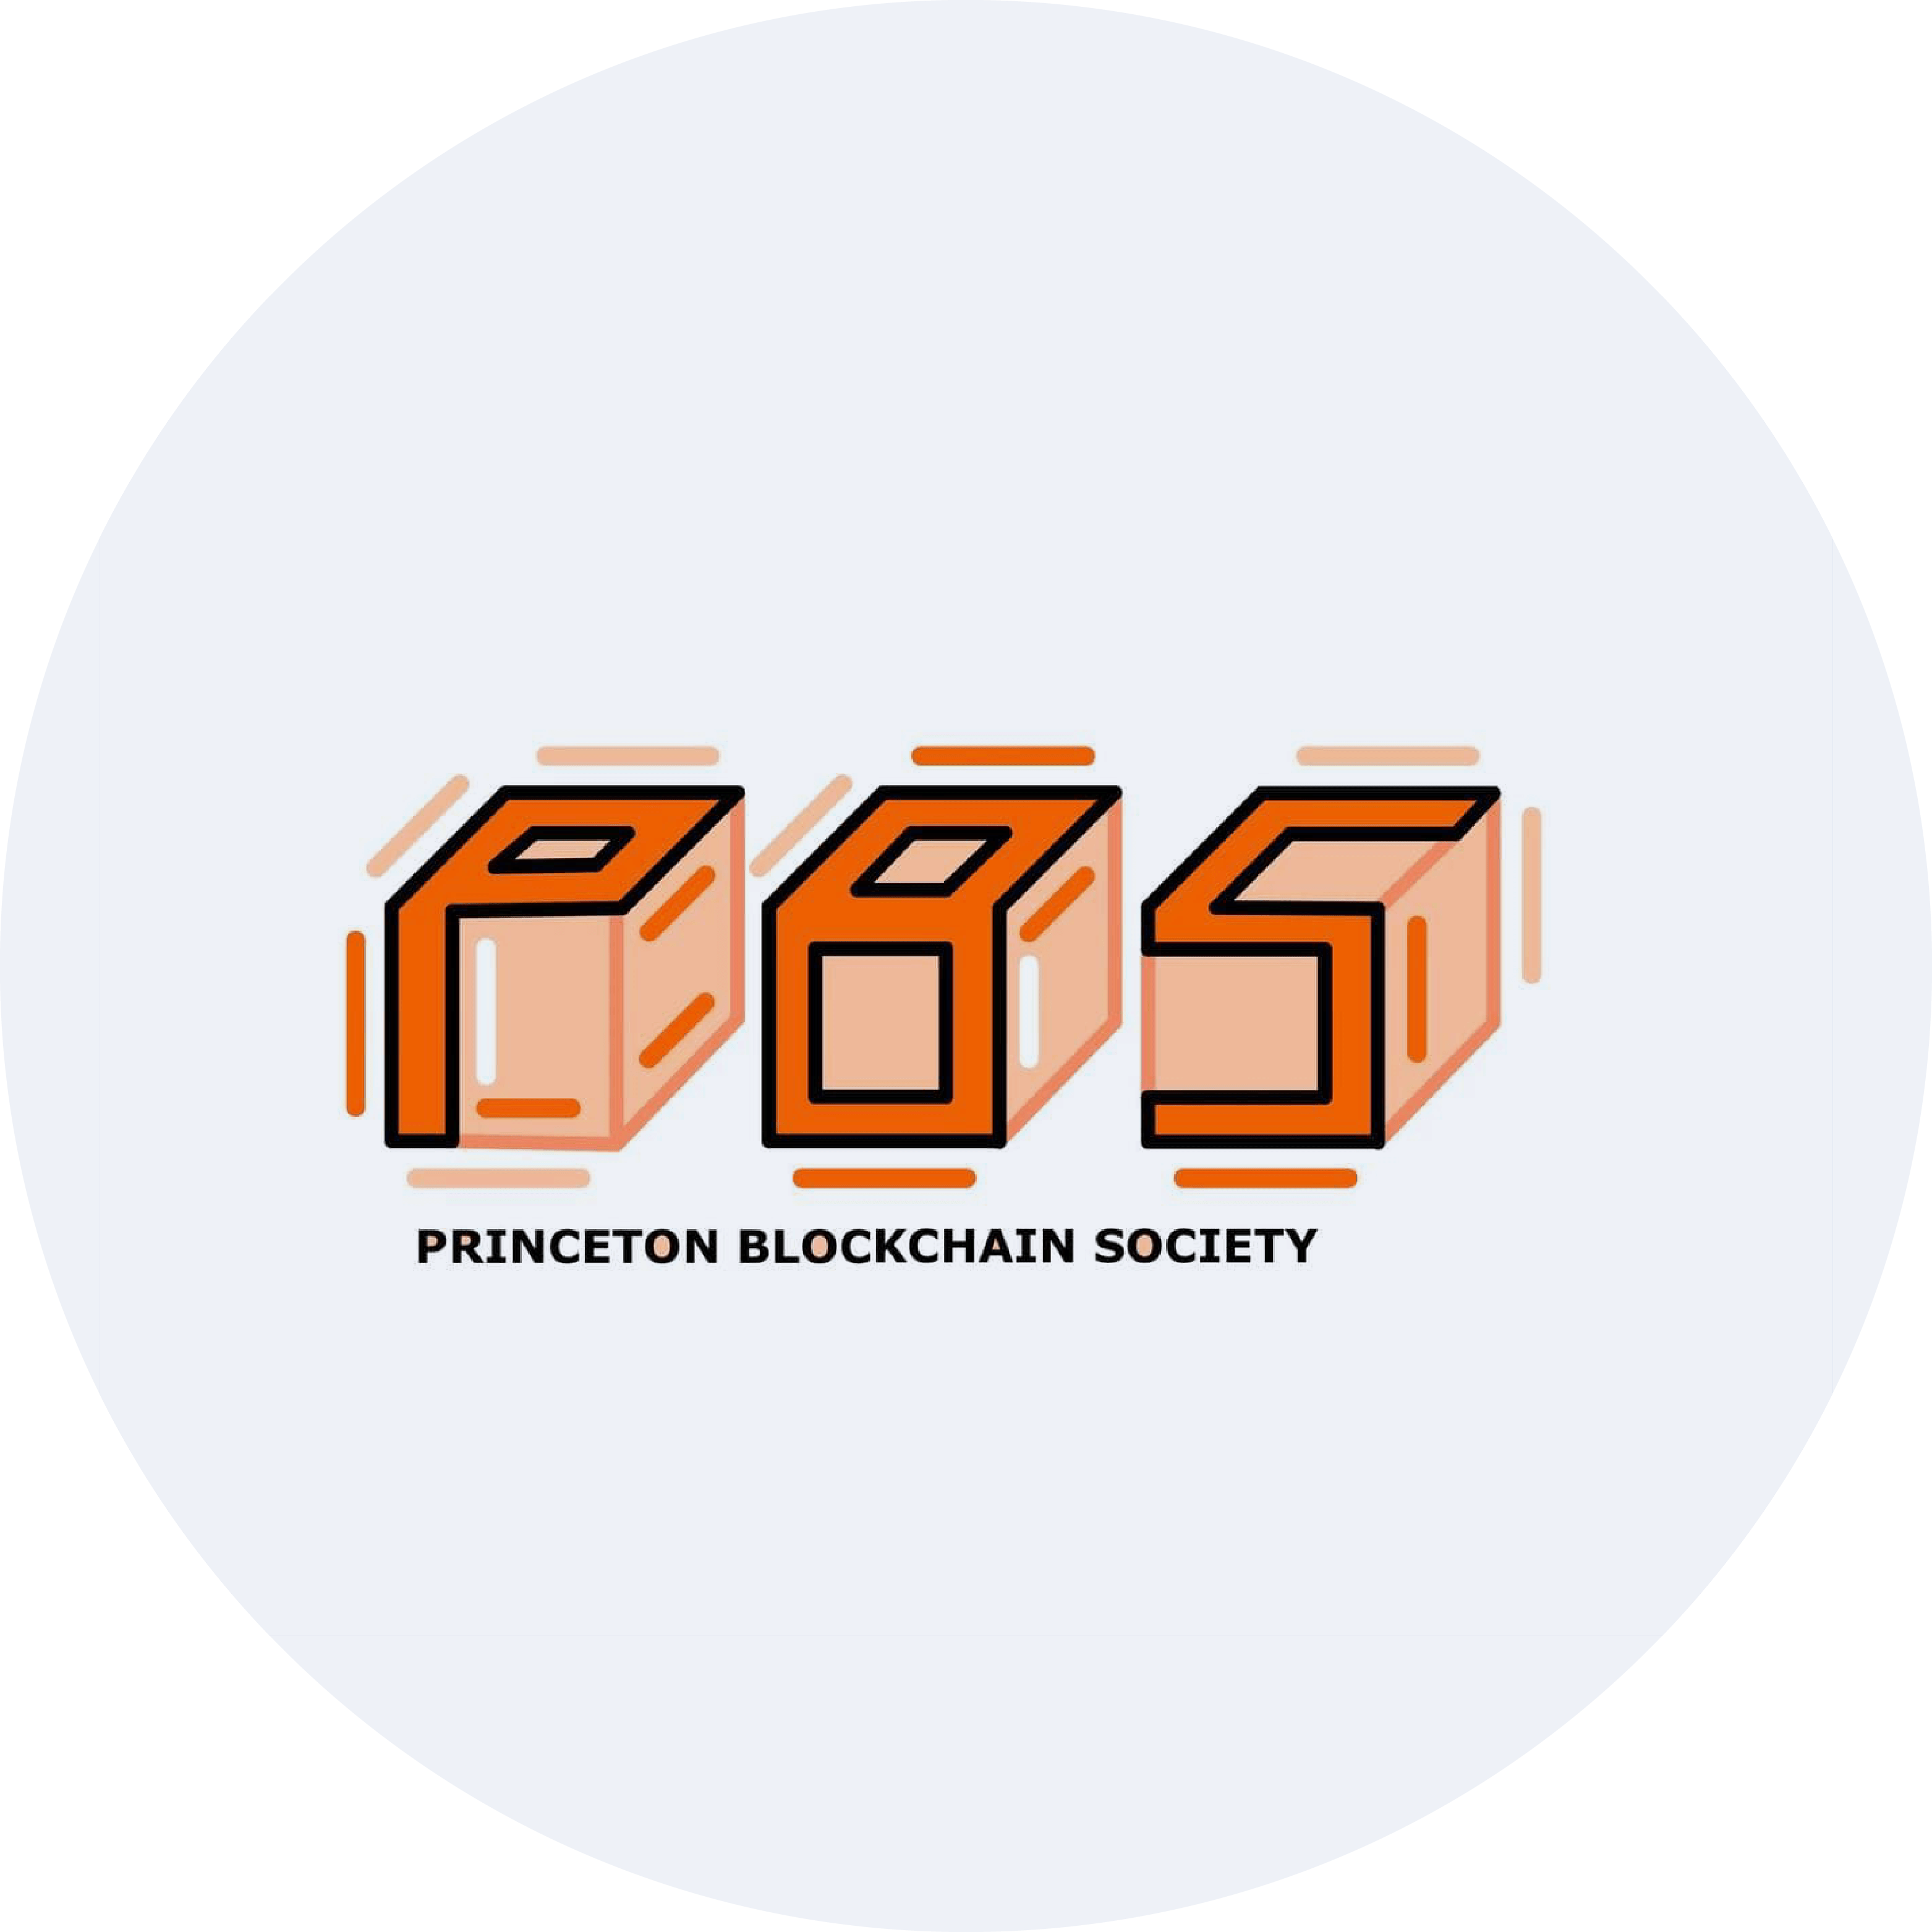 Princeton Blockchain Society